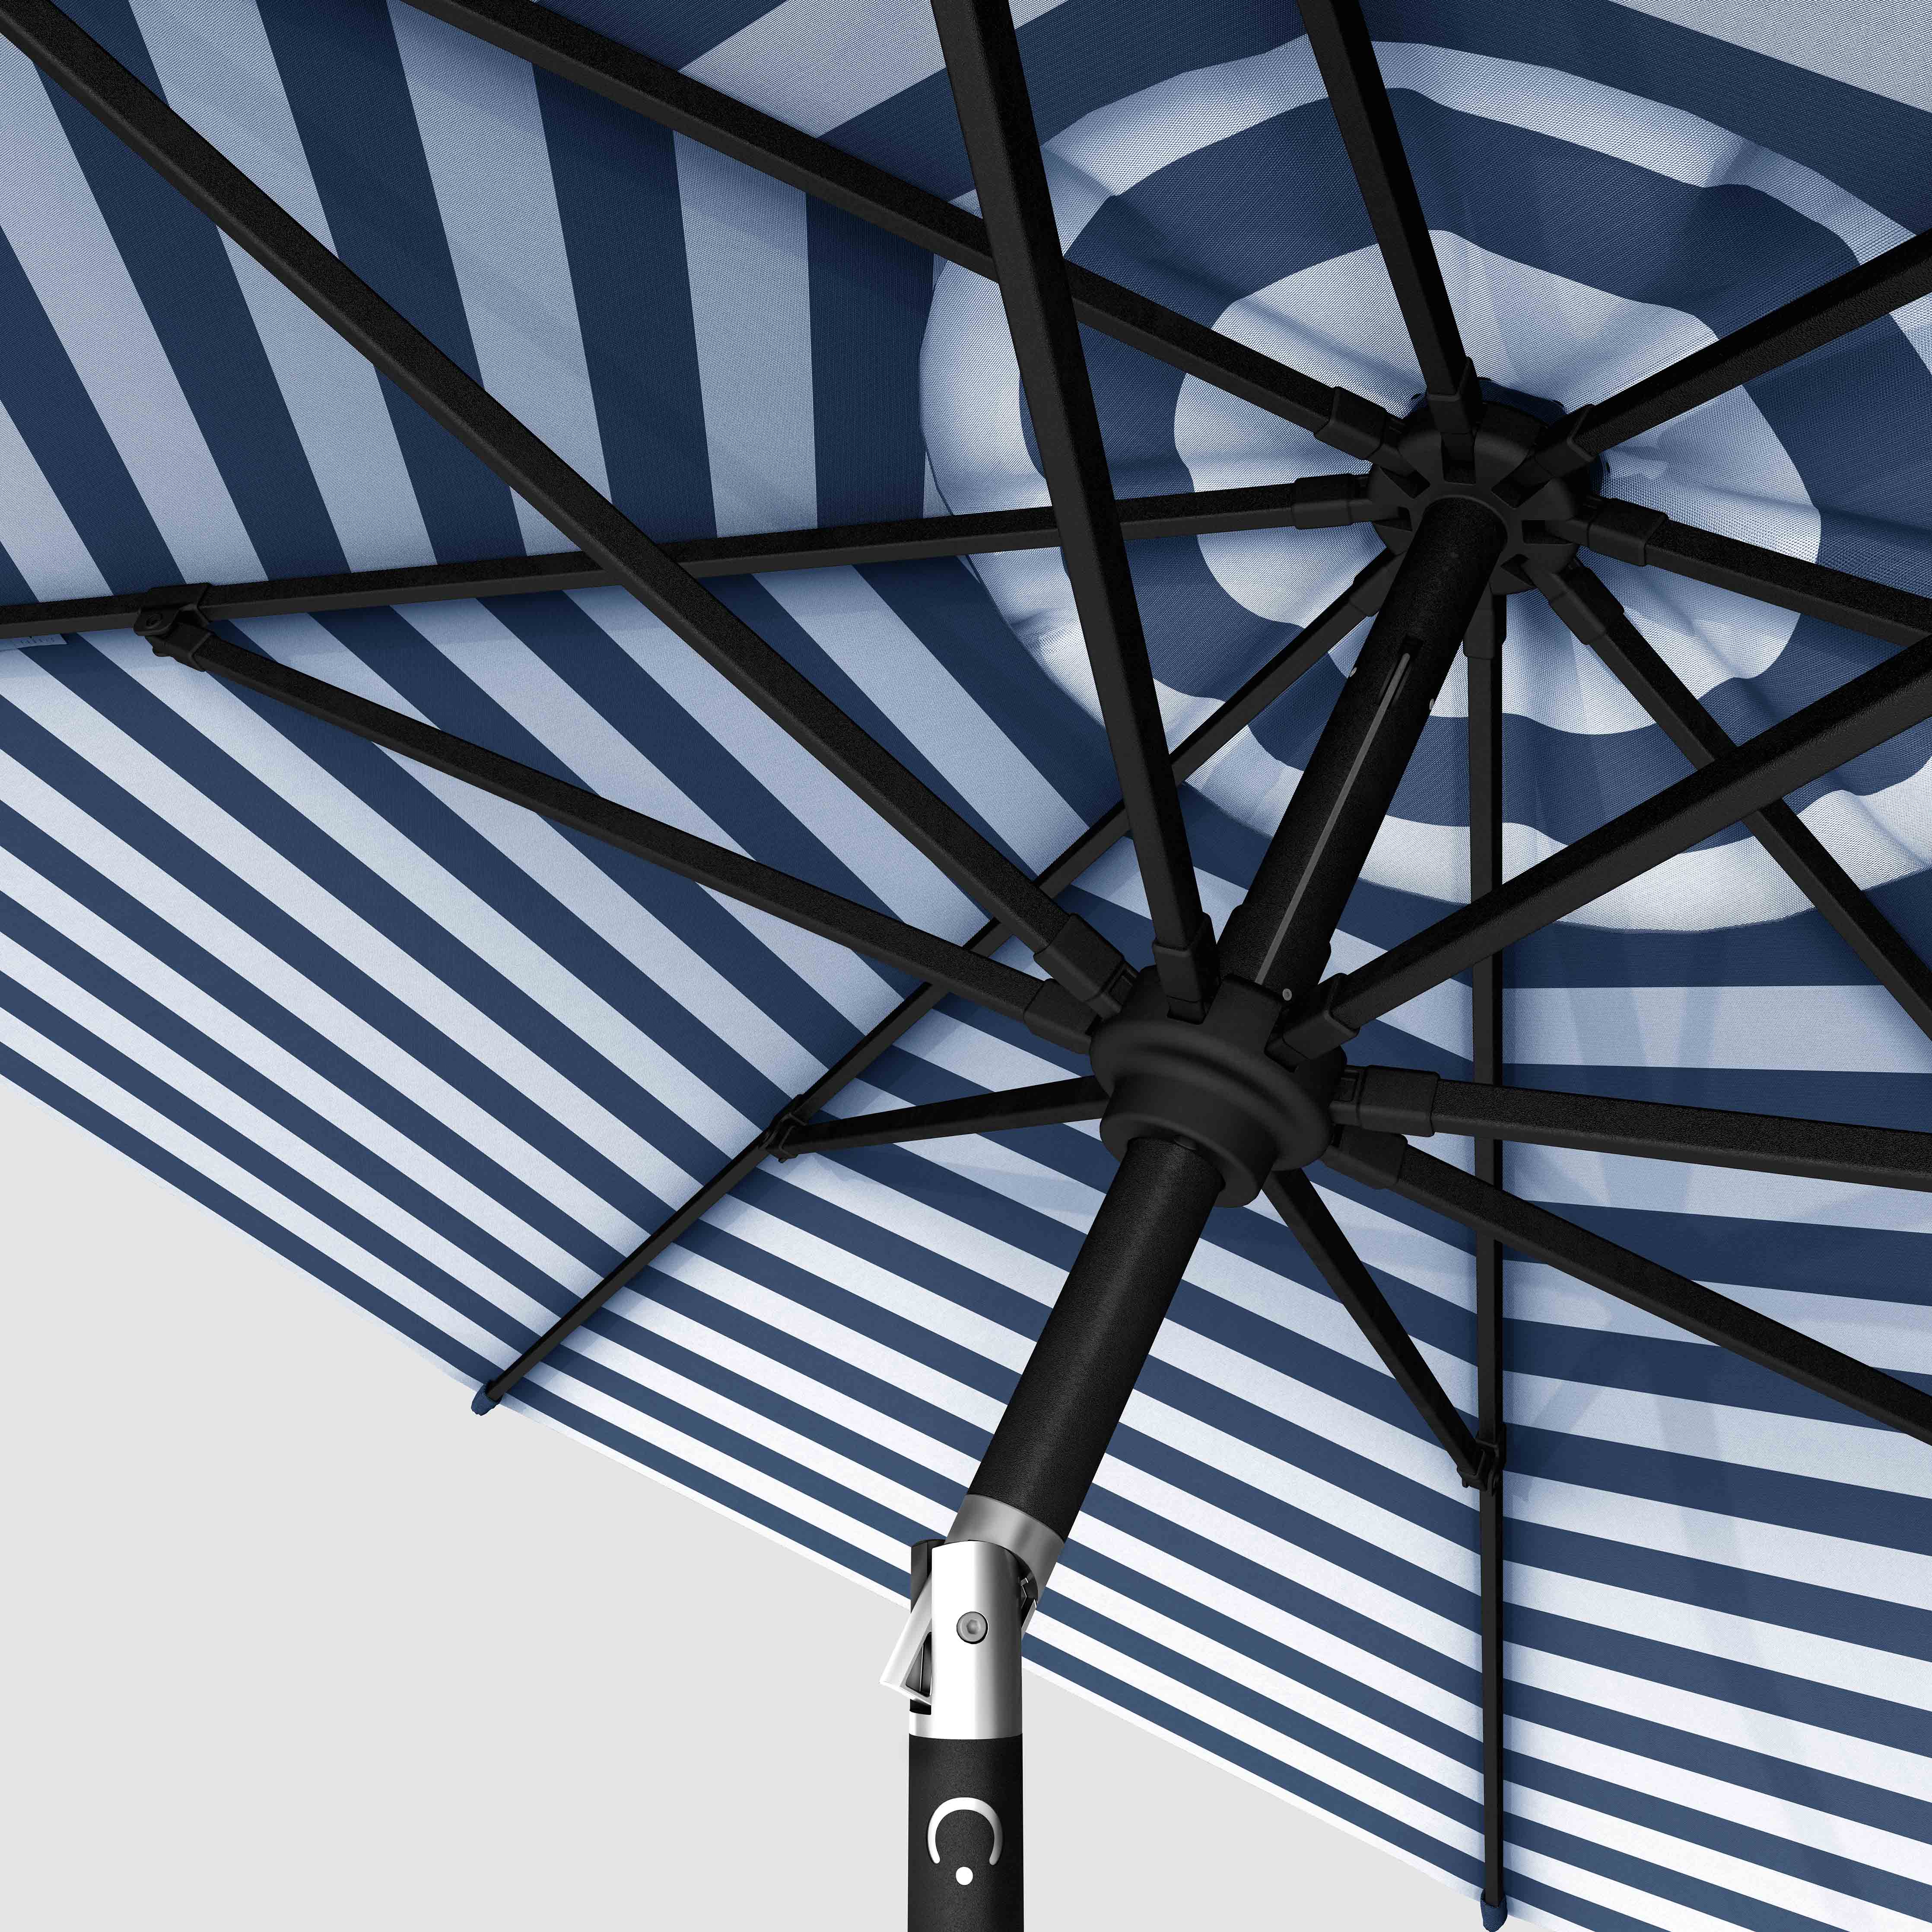 The Lean™ - Regata Sunbrella Cabana